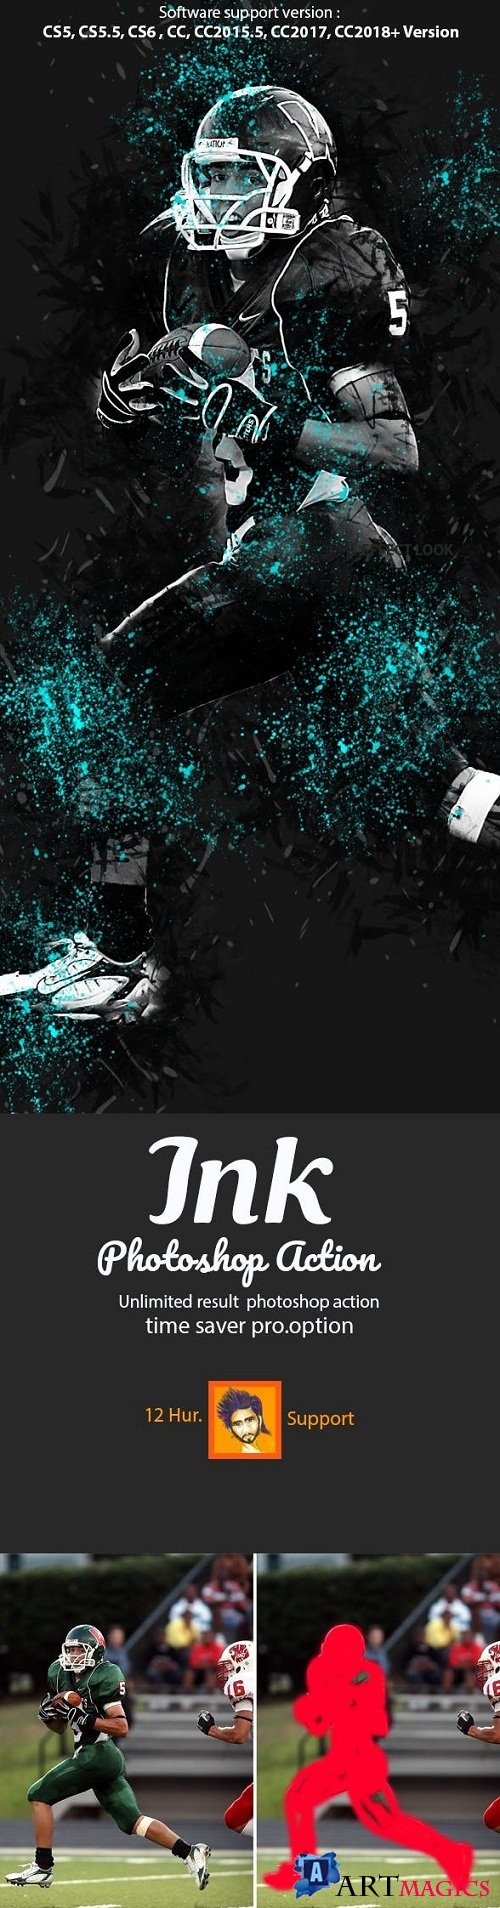 Ink Art Photoshop Action 22859820